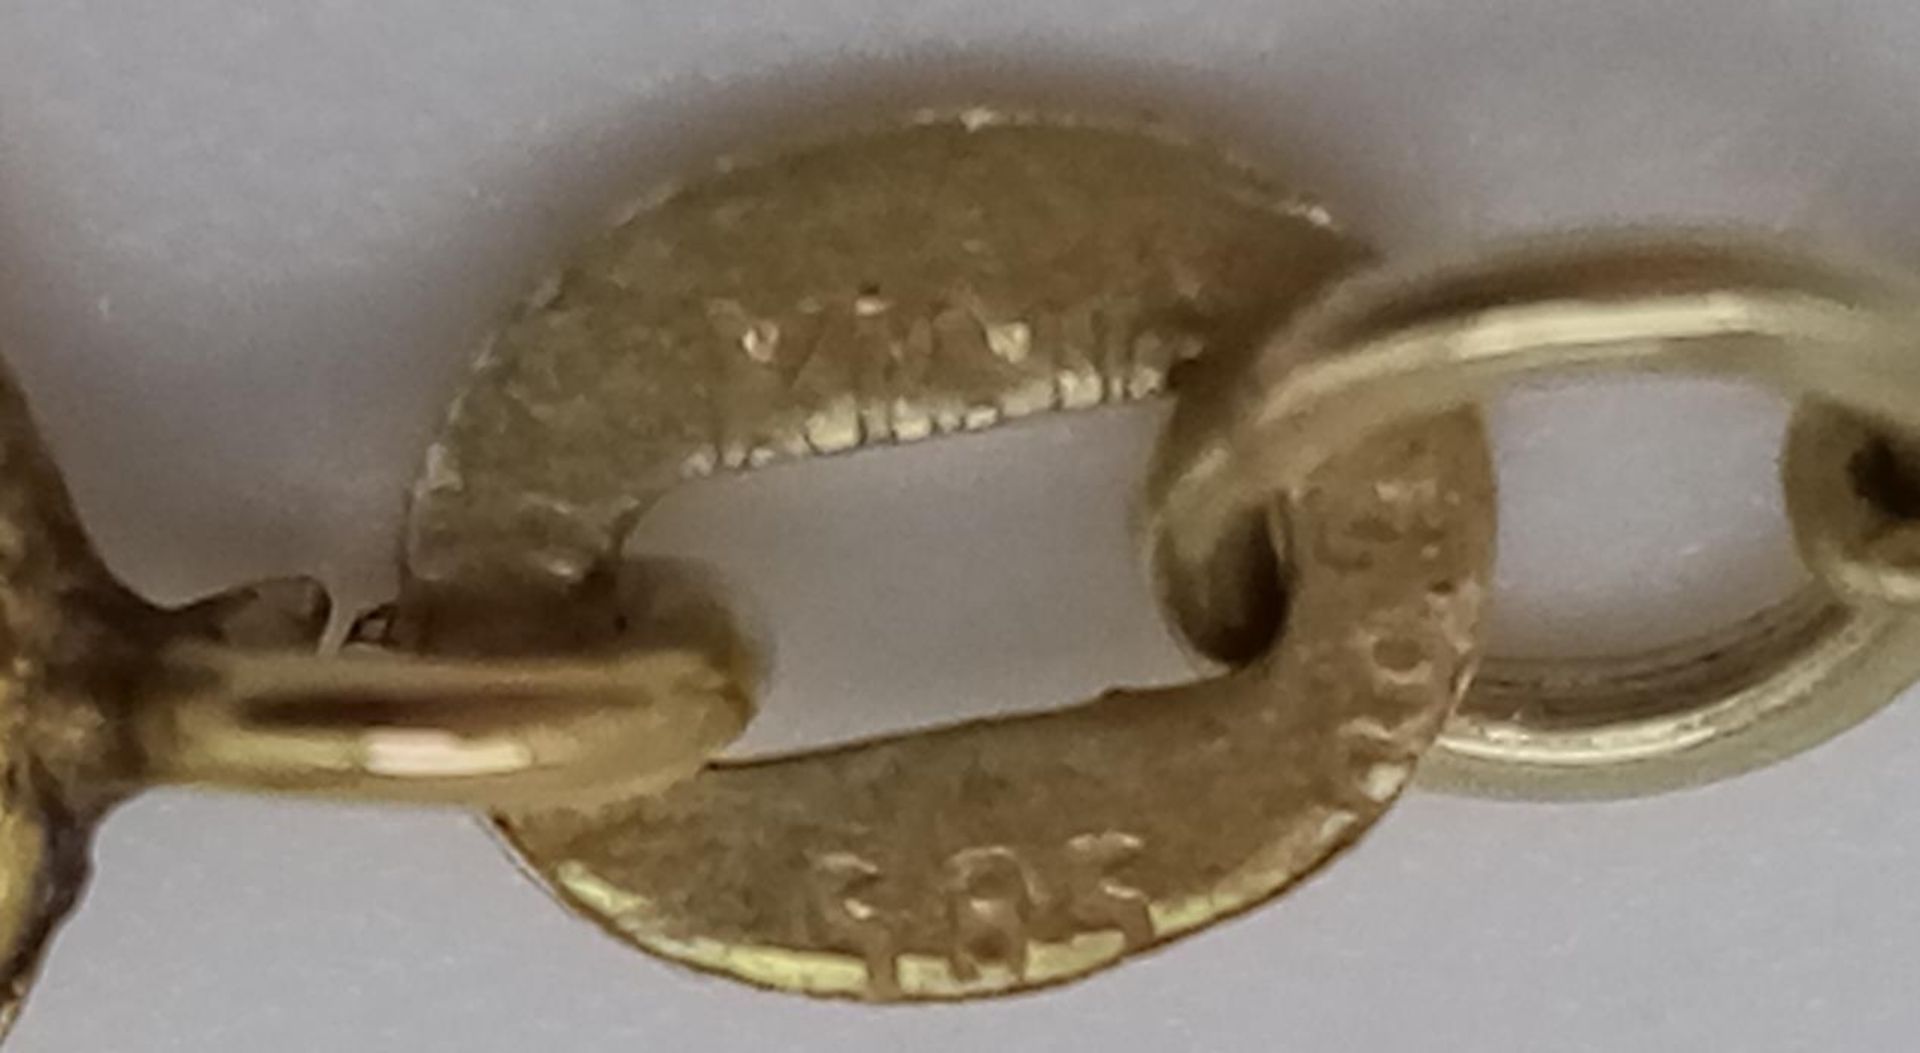 A PRETTY 14K YELLOW GOLD DIAMOND, SAPPHIRE, RUBY & EMERALD PENDANT ON FIGARO CHAIN, WEIGHT 5.8G - Image 10 of 11